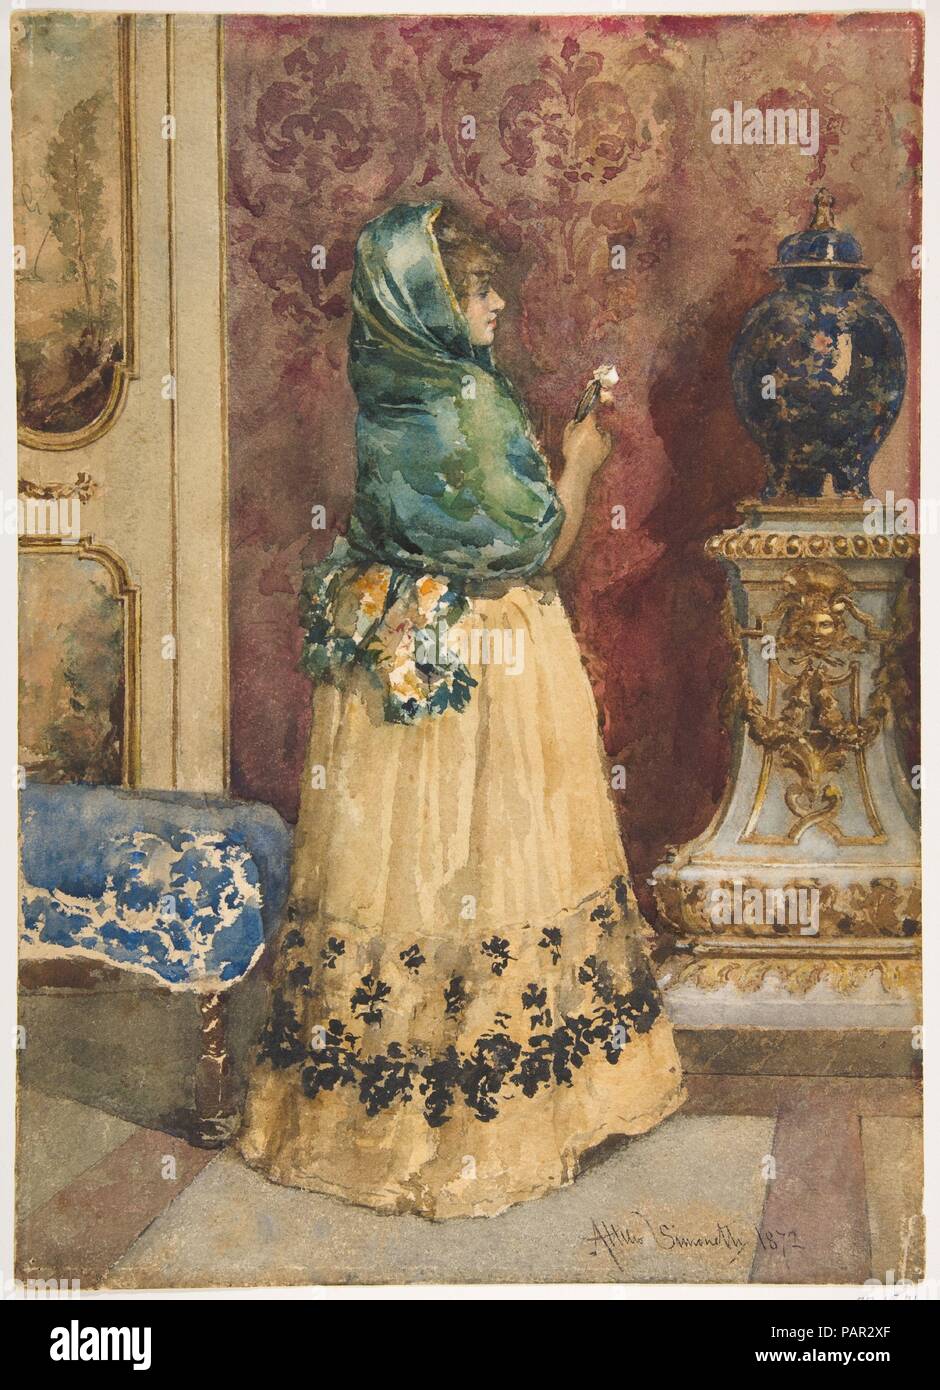 The Miniature. Artist: Attilio Simonetti (Italian, Rome 1843-1925 Rome). Dimensions: 14 x 10 in.  (35.6 x 25.4 cm). Date: 1843-1925. Museum: Metropolitan Museum of Art, New York, USA. Stock Photo